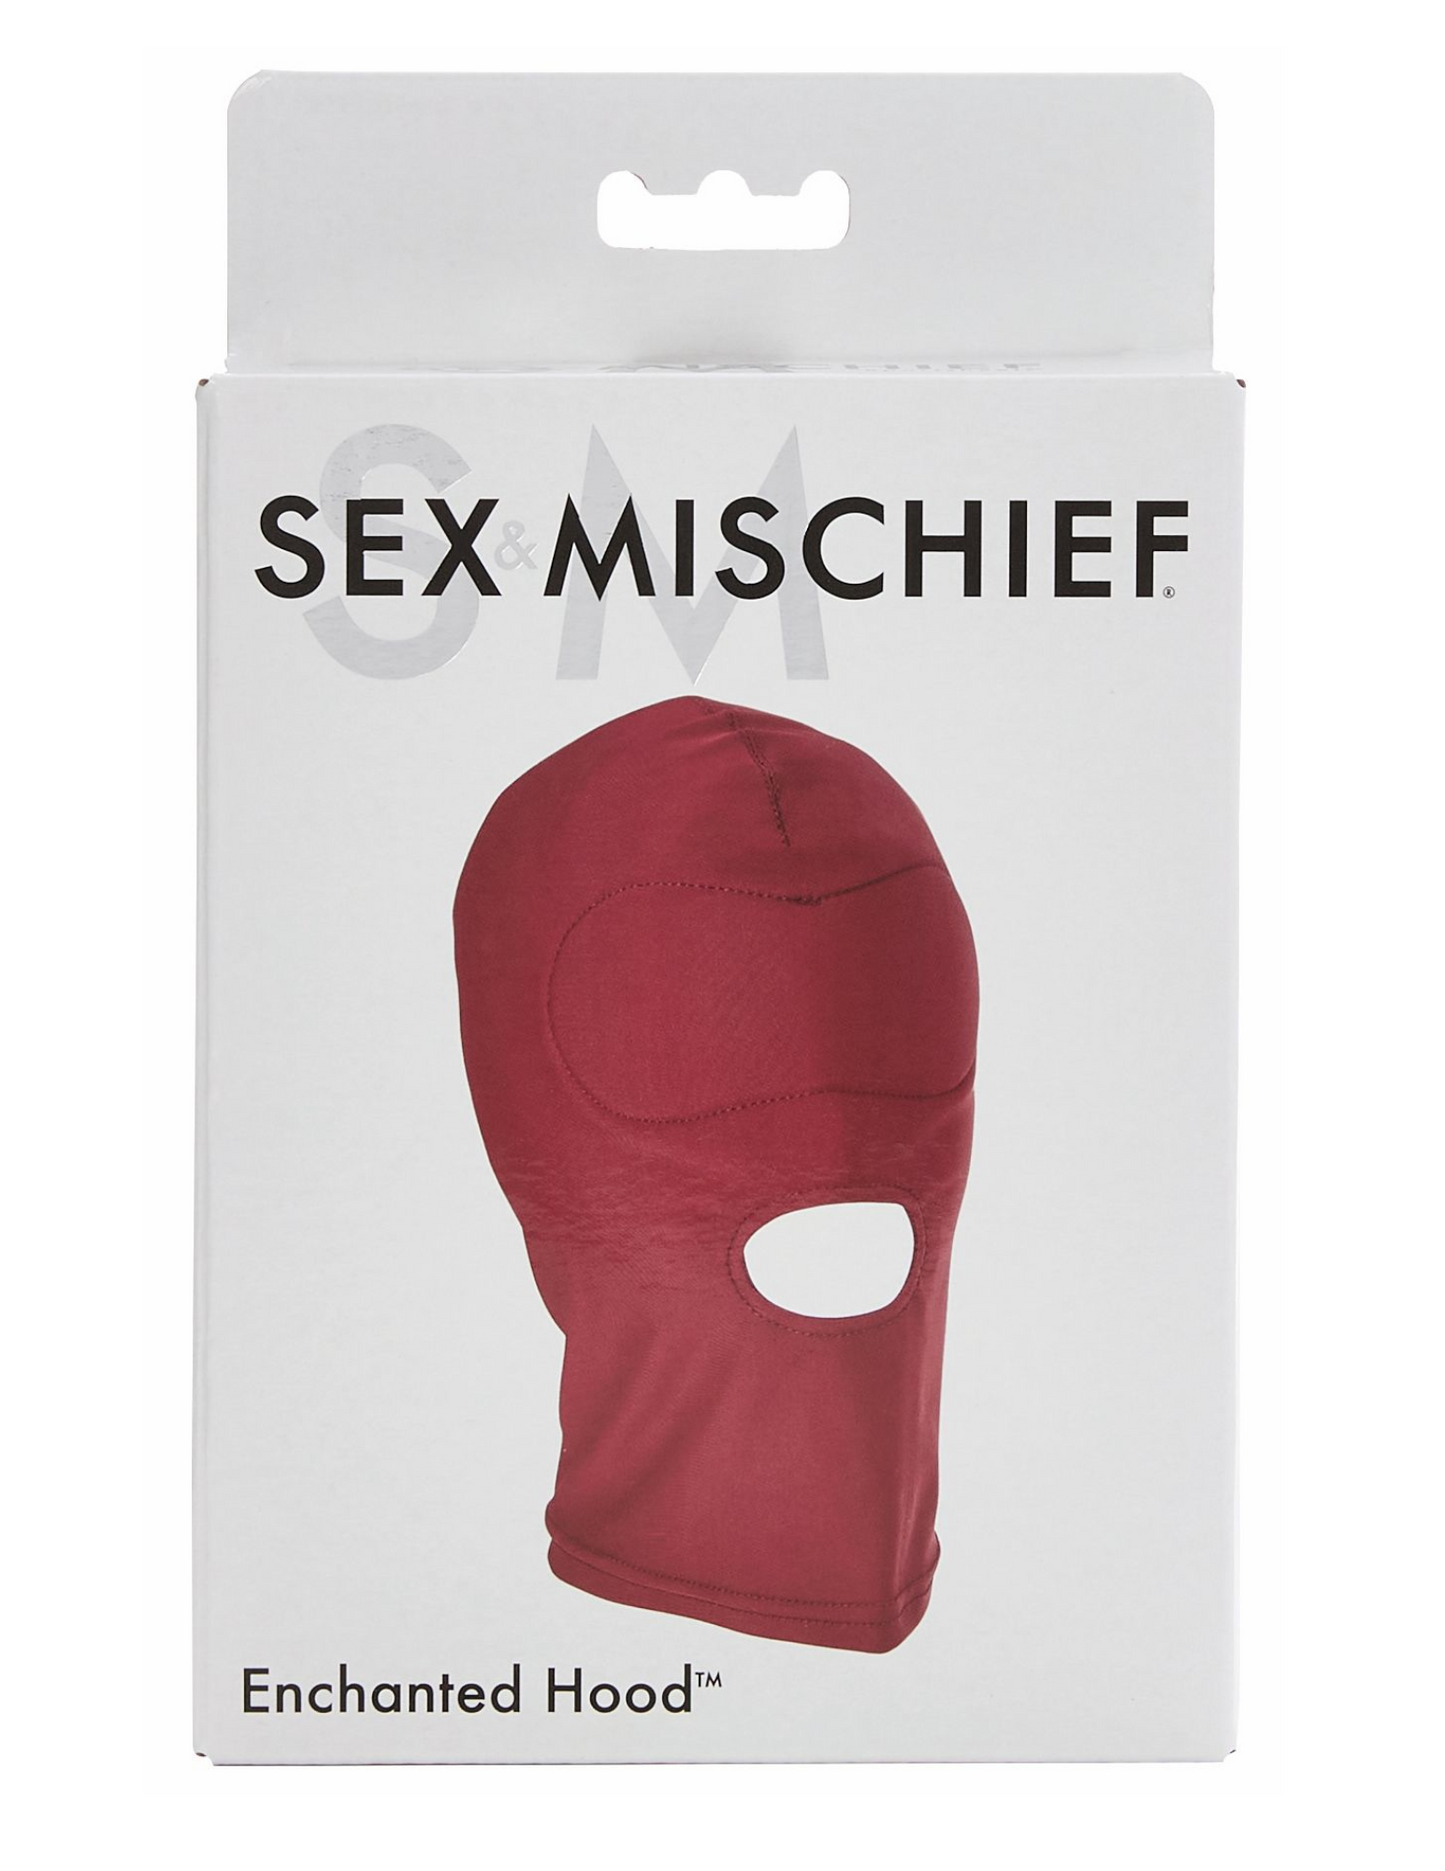 Sportsheets Sex & Mischief Enchanted Hood in its box (red).